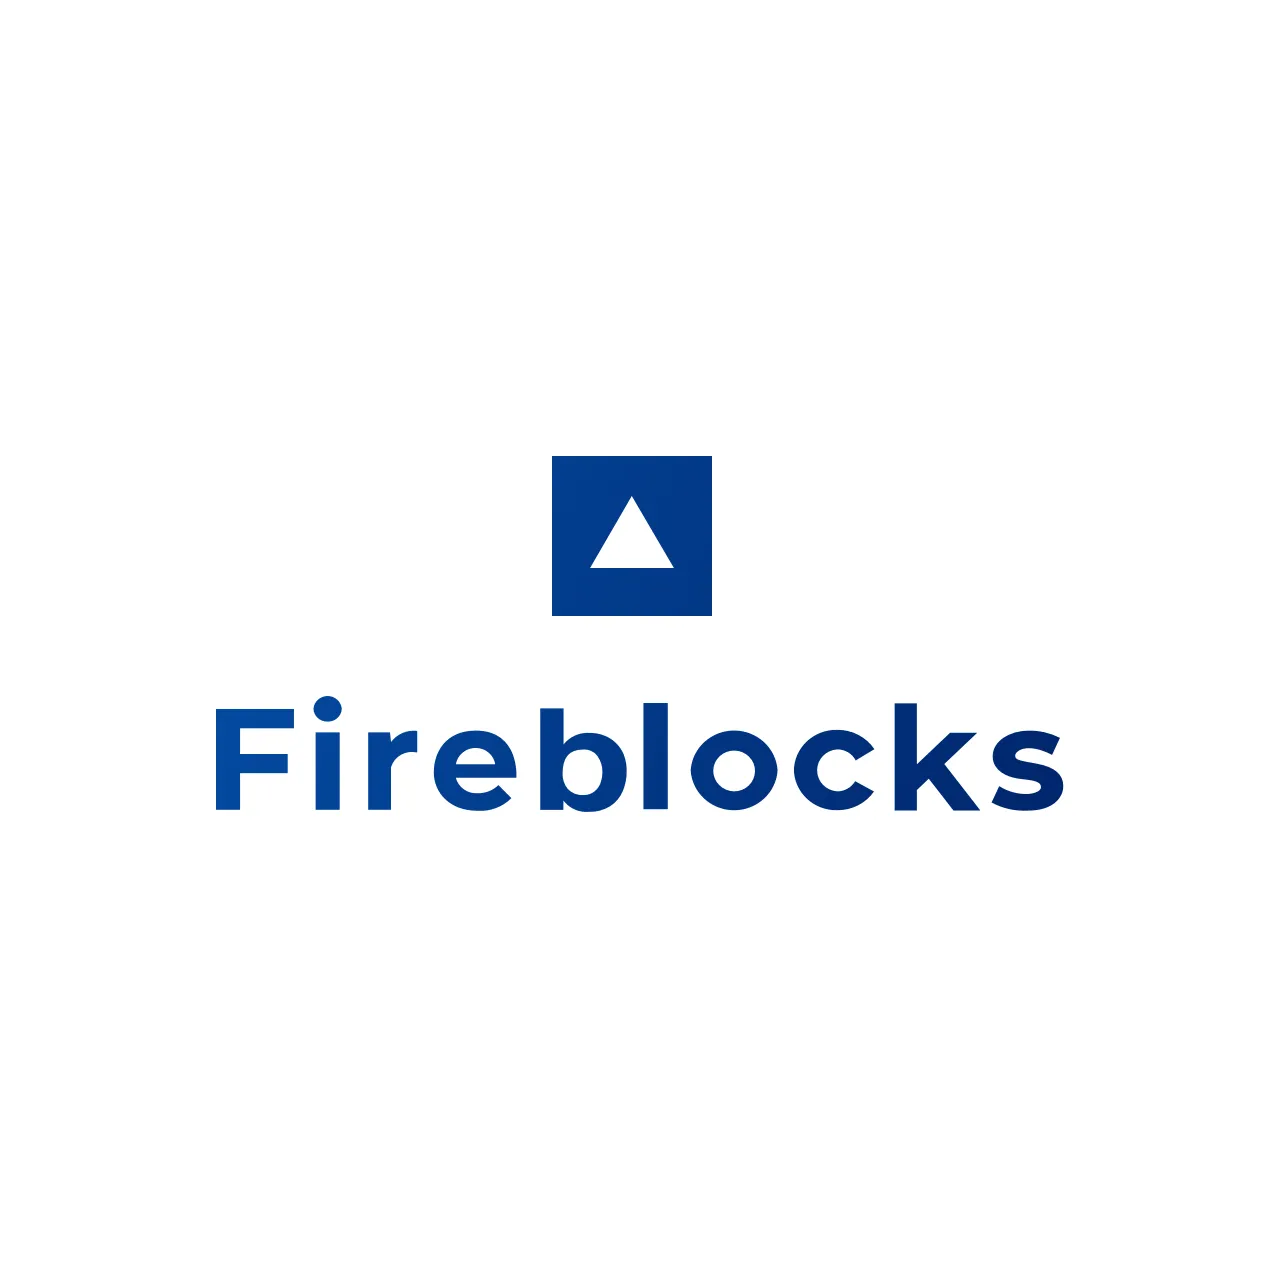 Fireblocks Overview And News Update